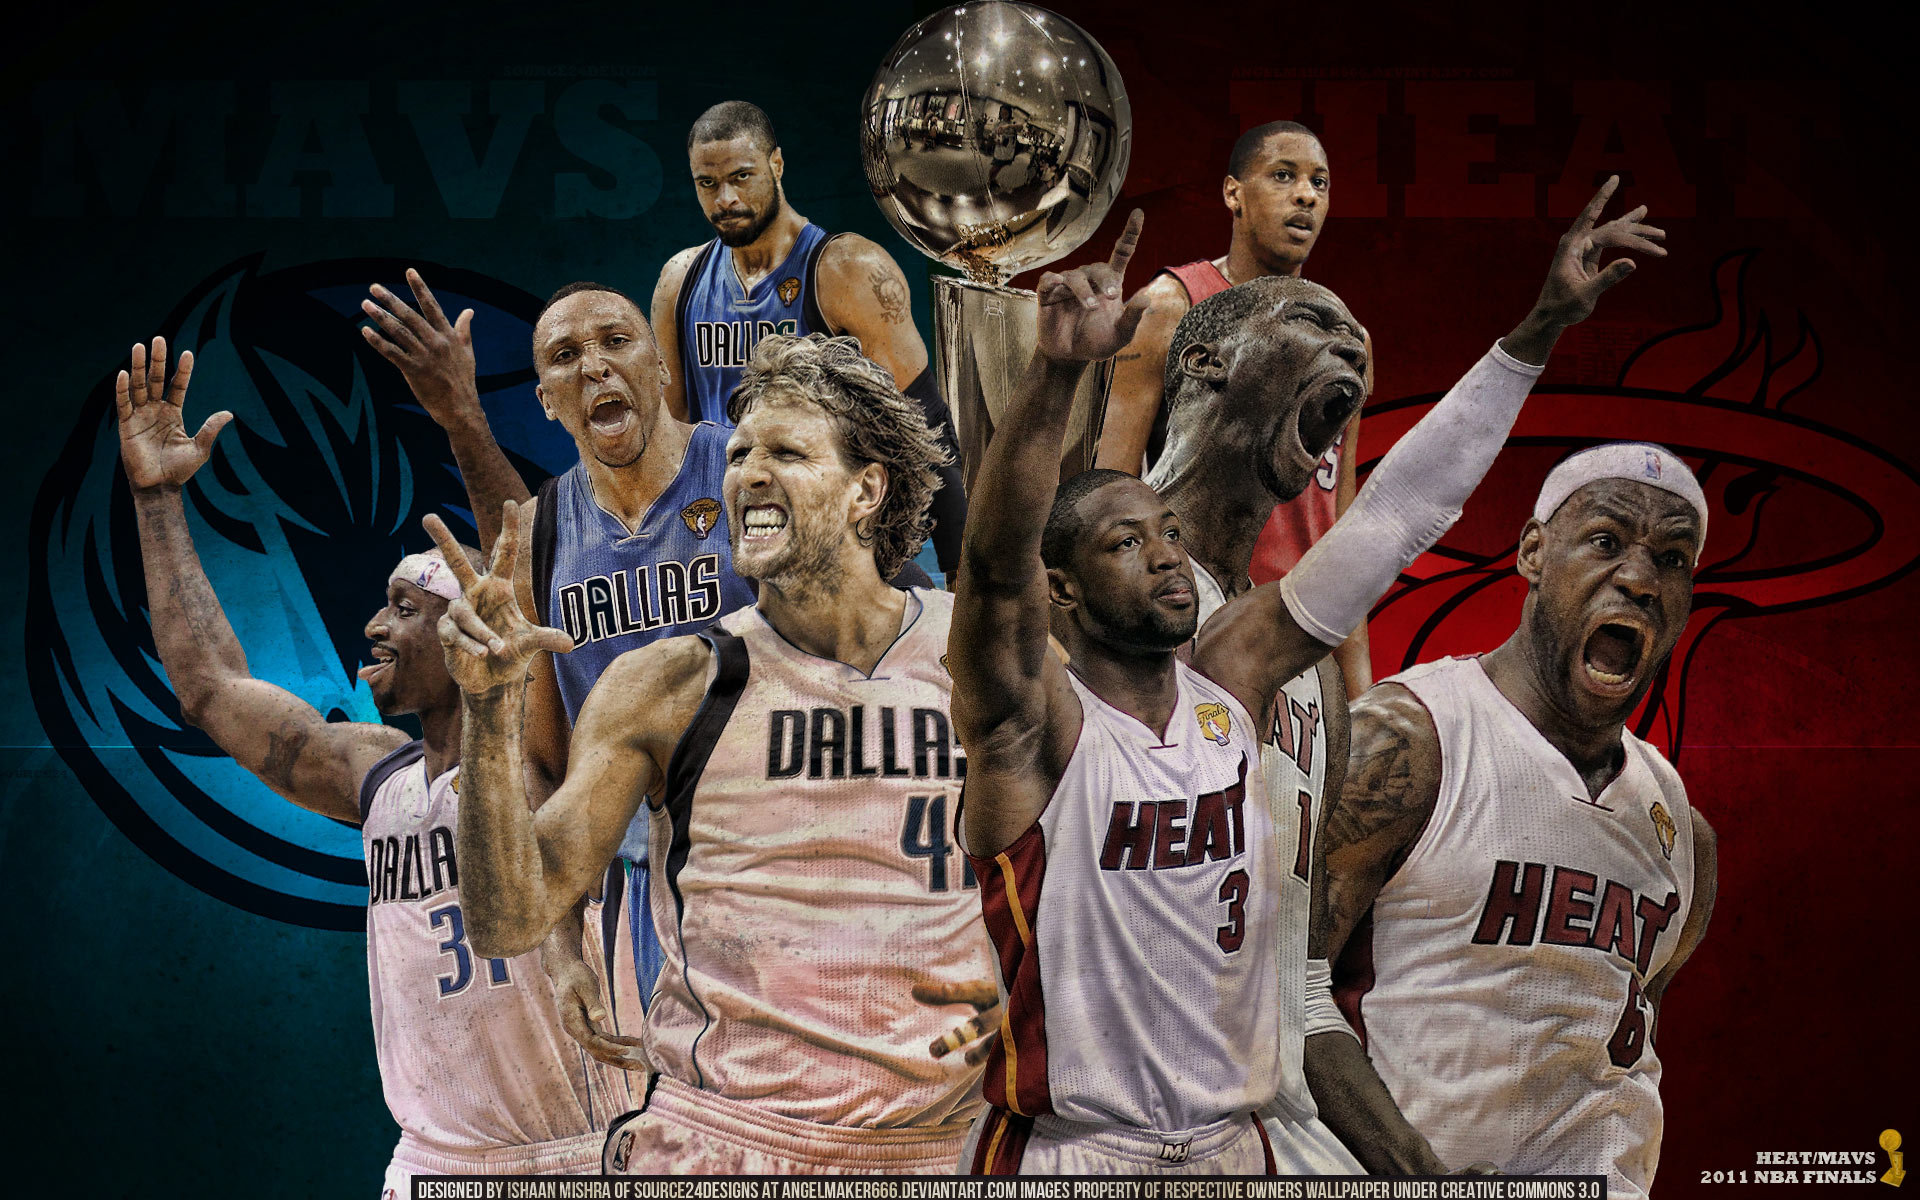 Miami Heat Team Wallpaper